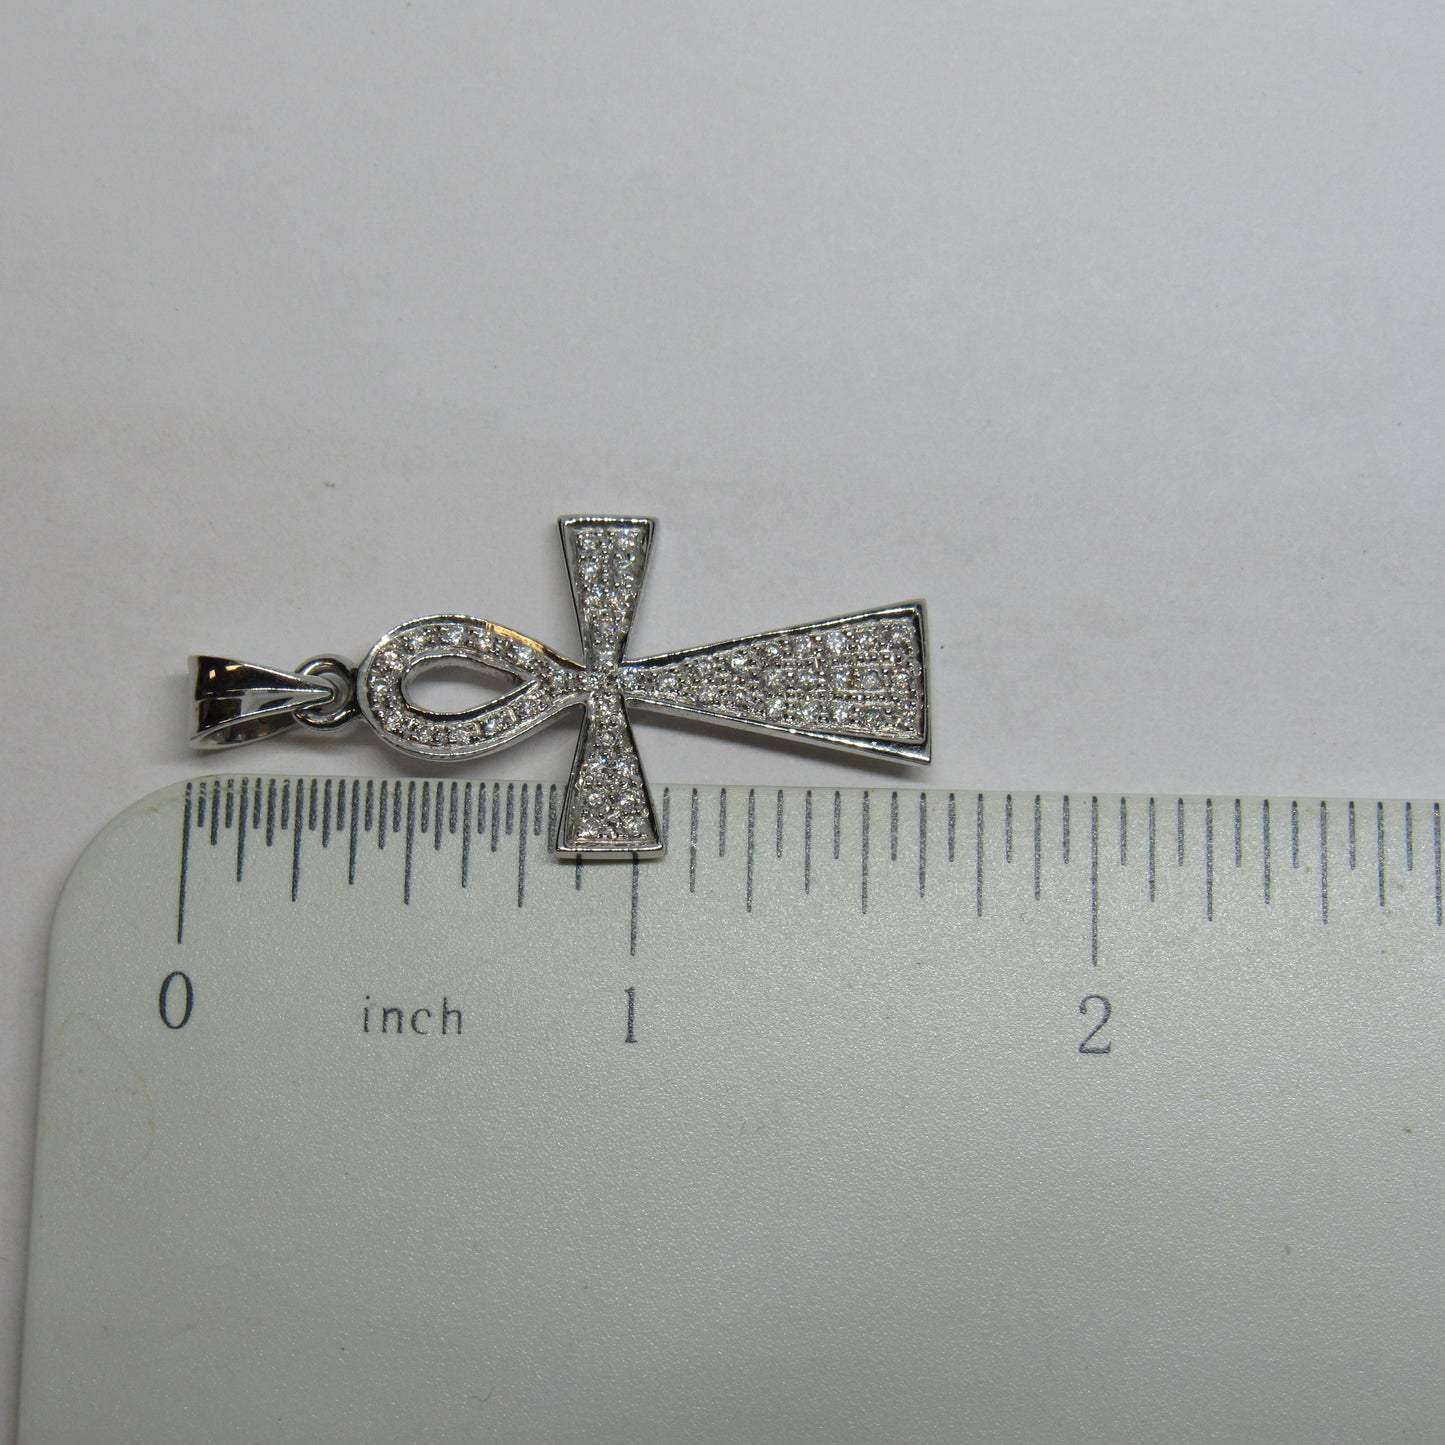 18k White Gold Ankh Shaped Diamond Pendant - 1 5/8 inch